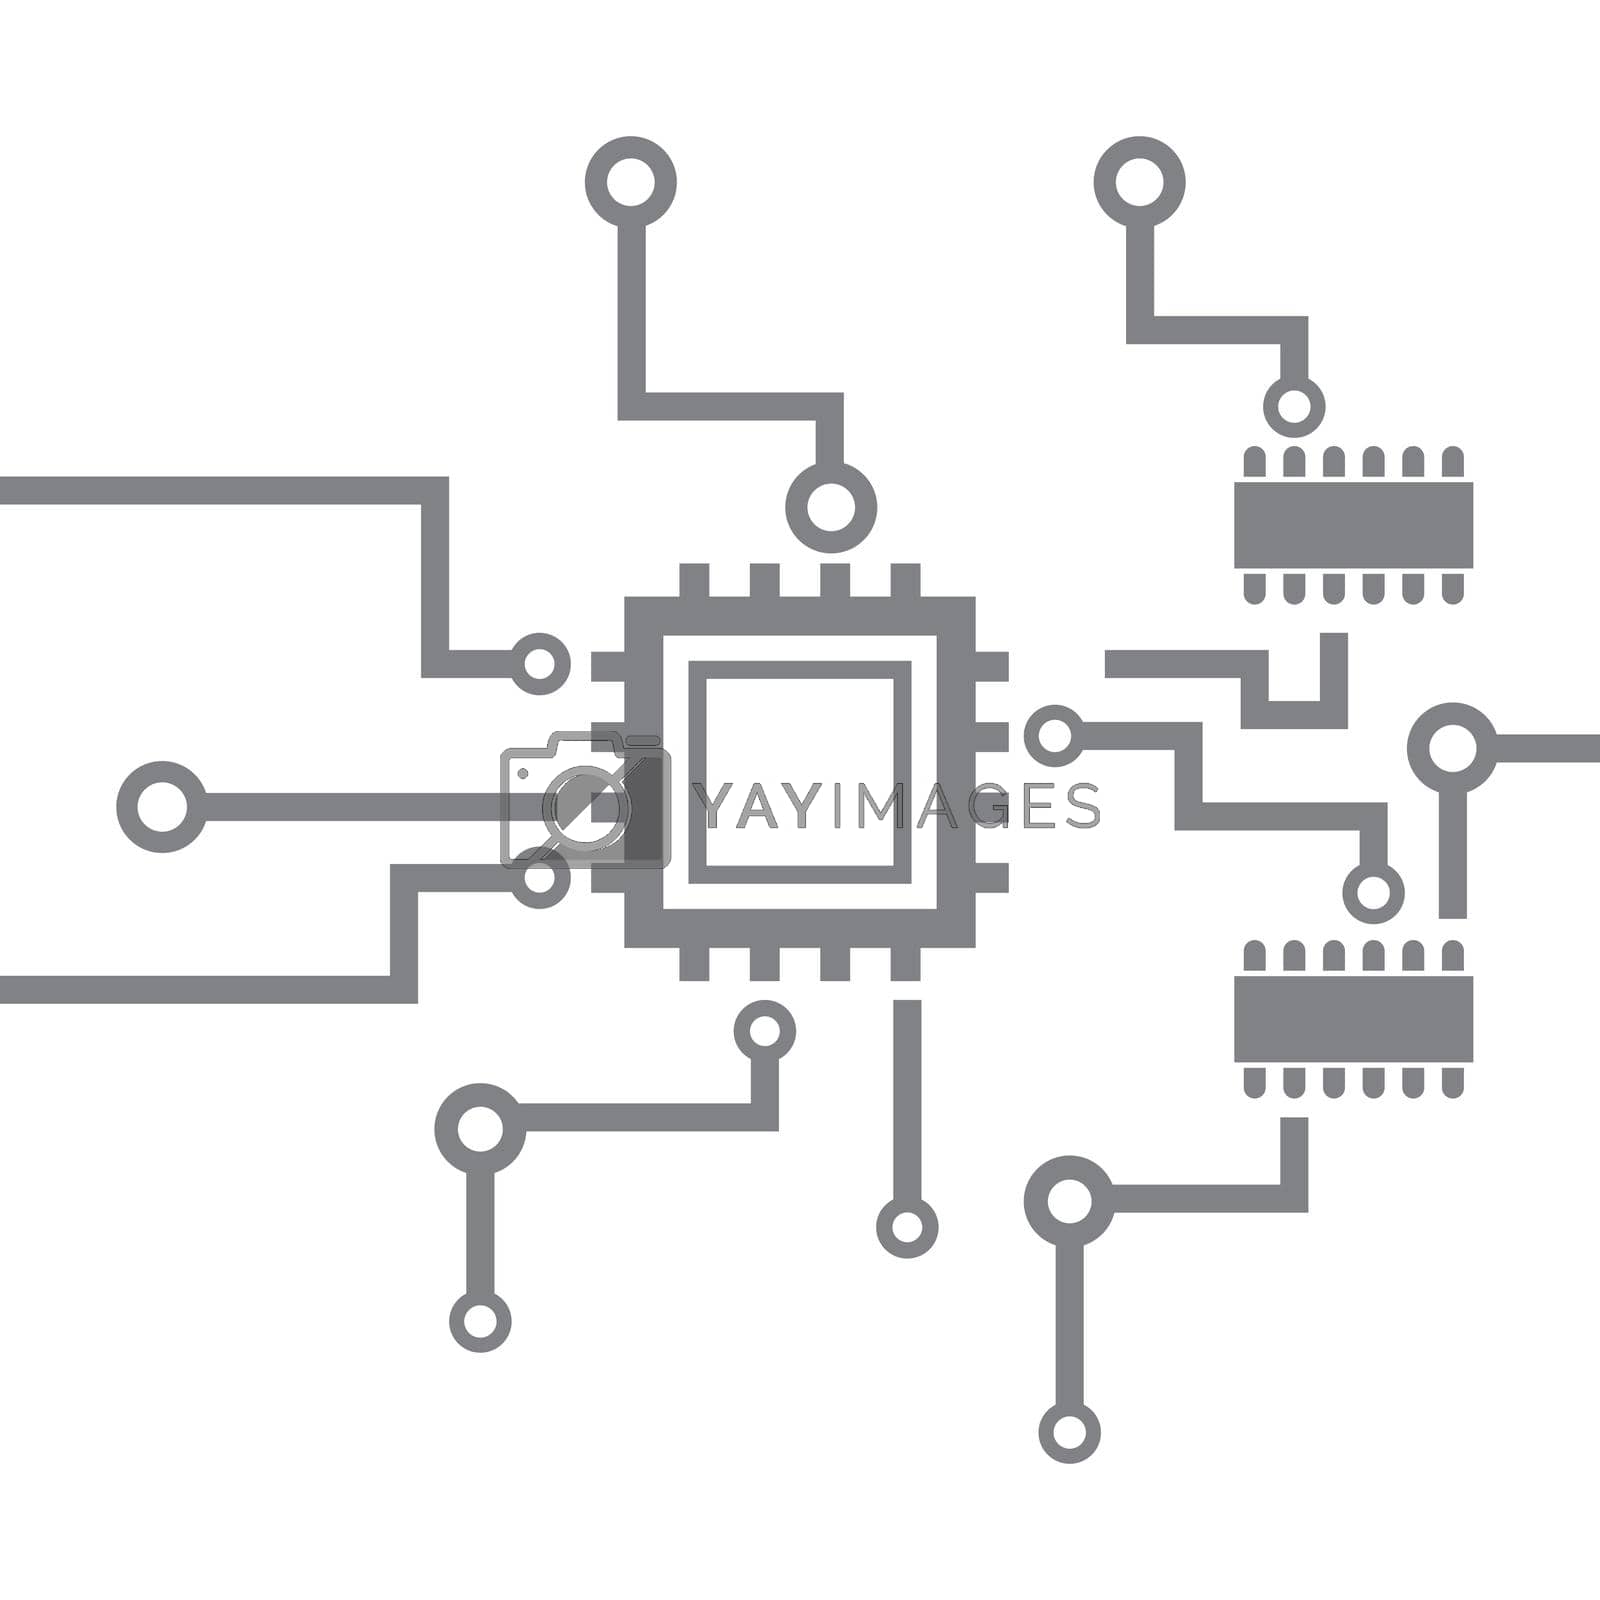 Circuit technology illustration logo vector template